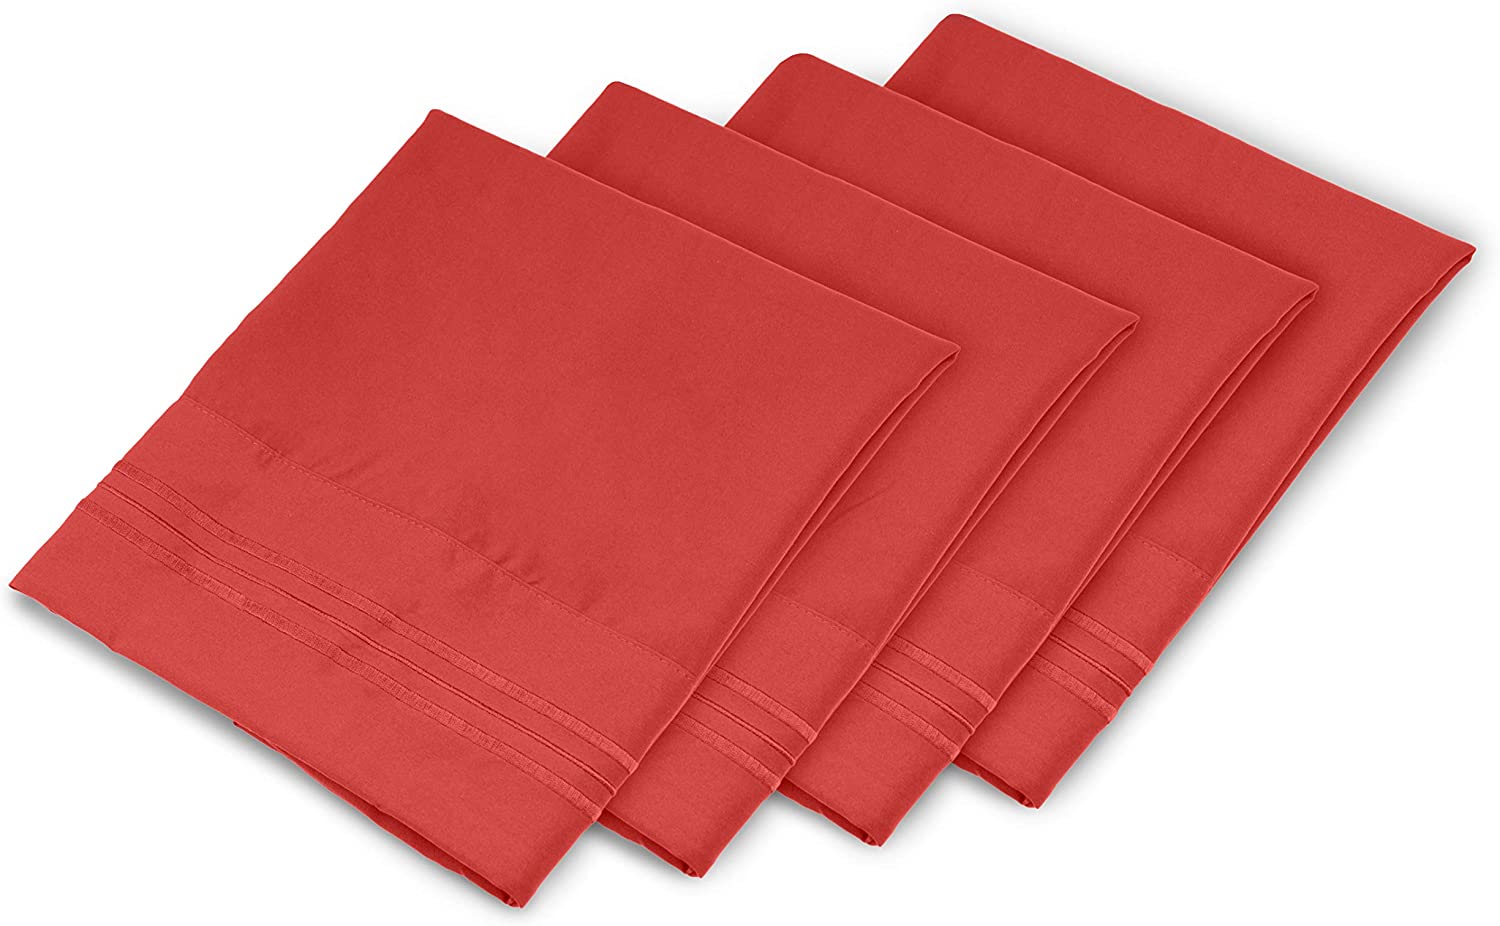 4 Pillowcase Set - Red